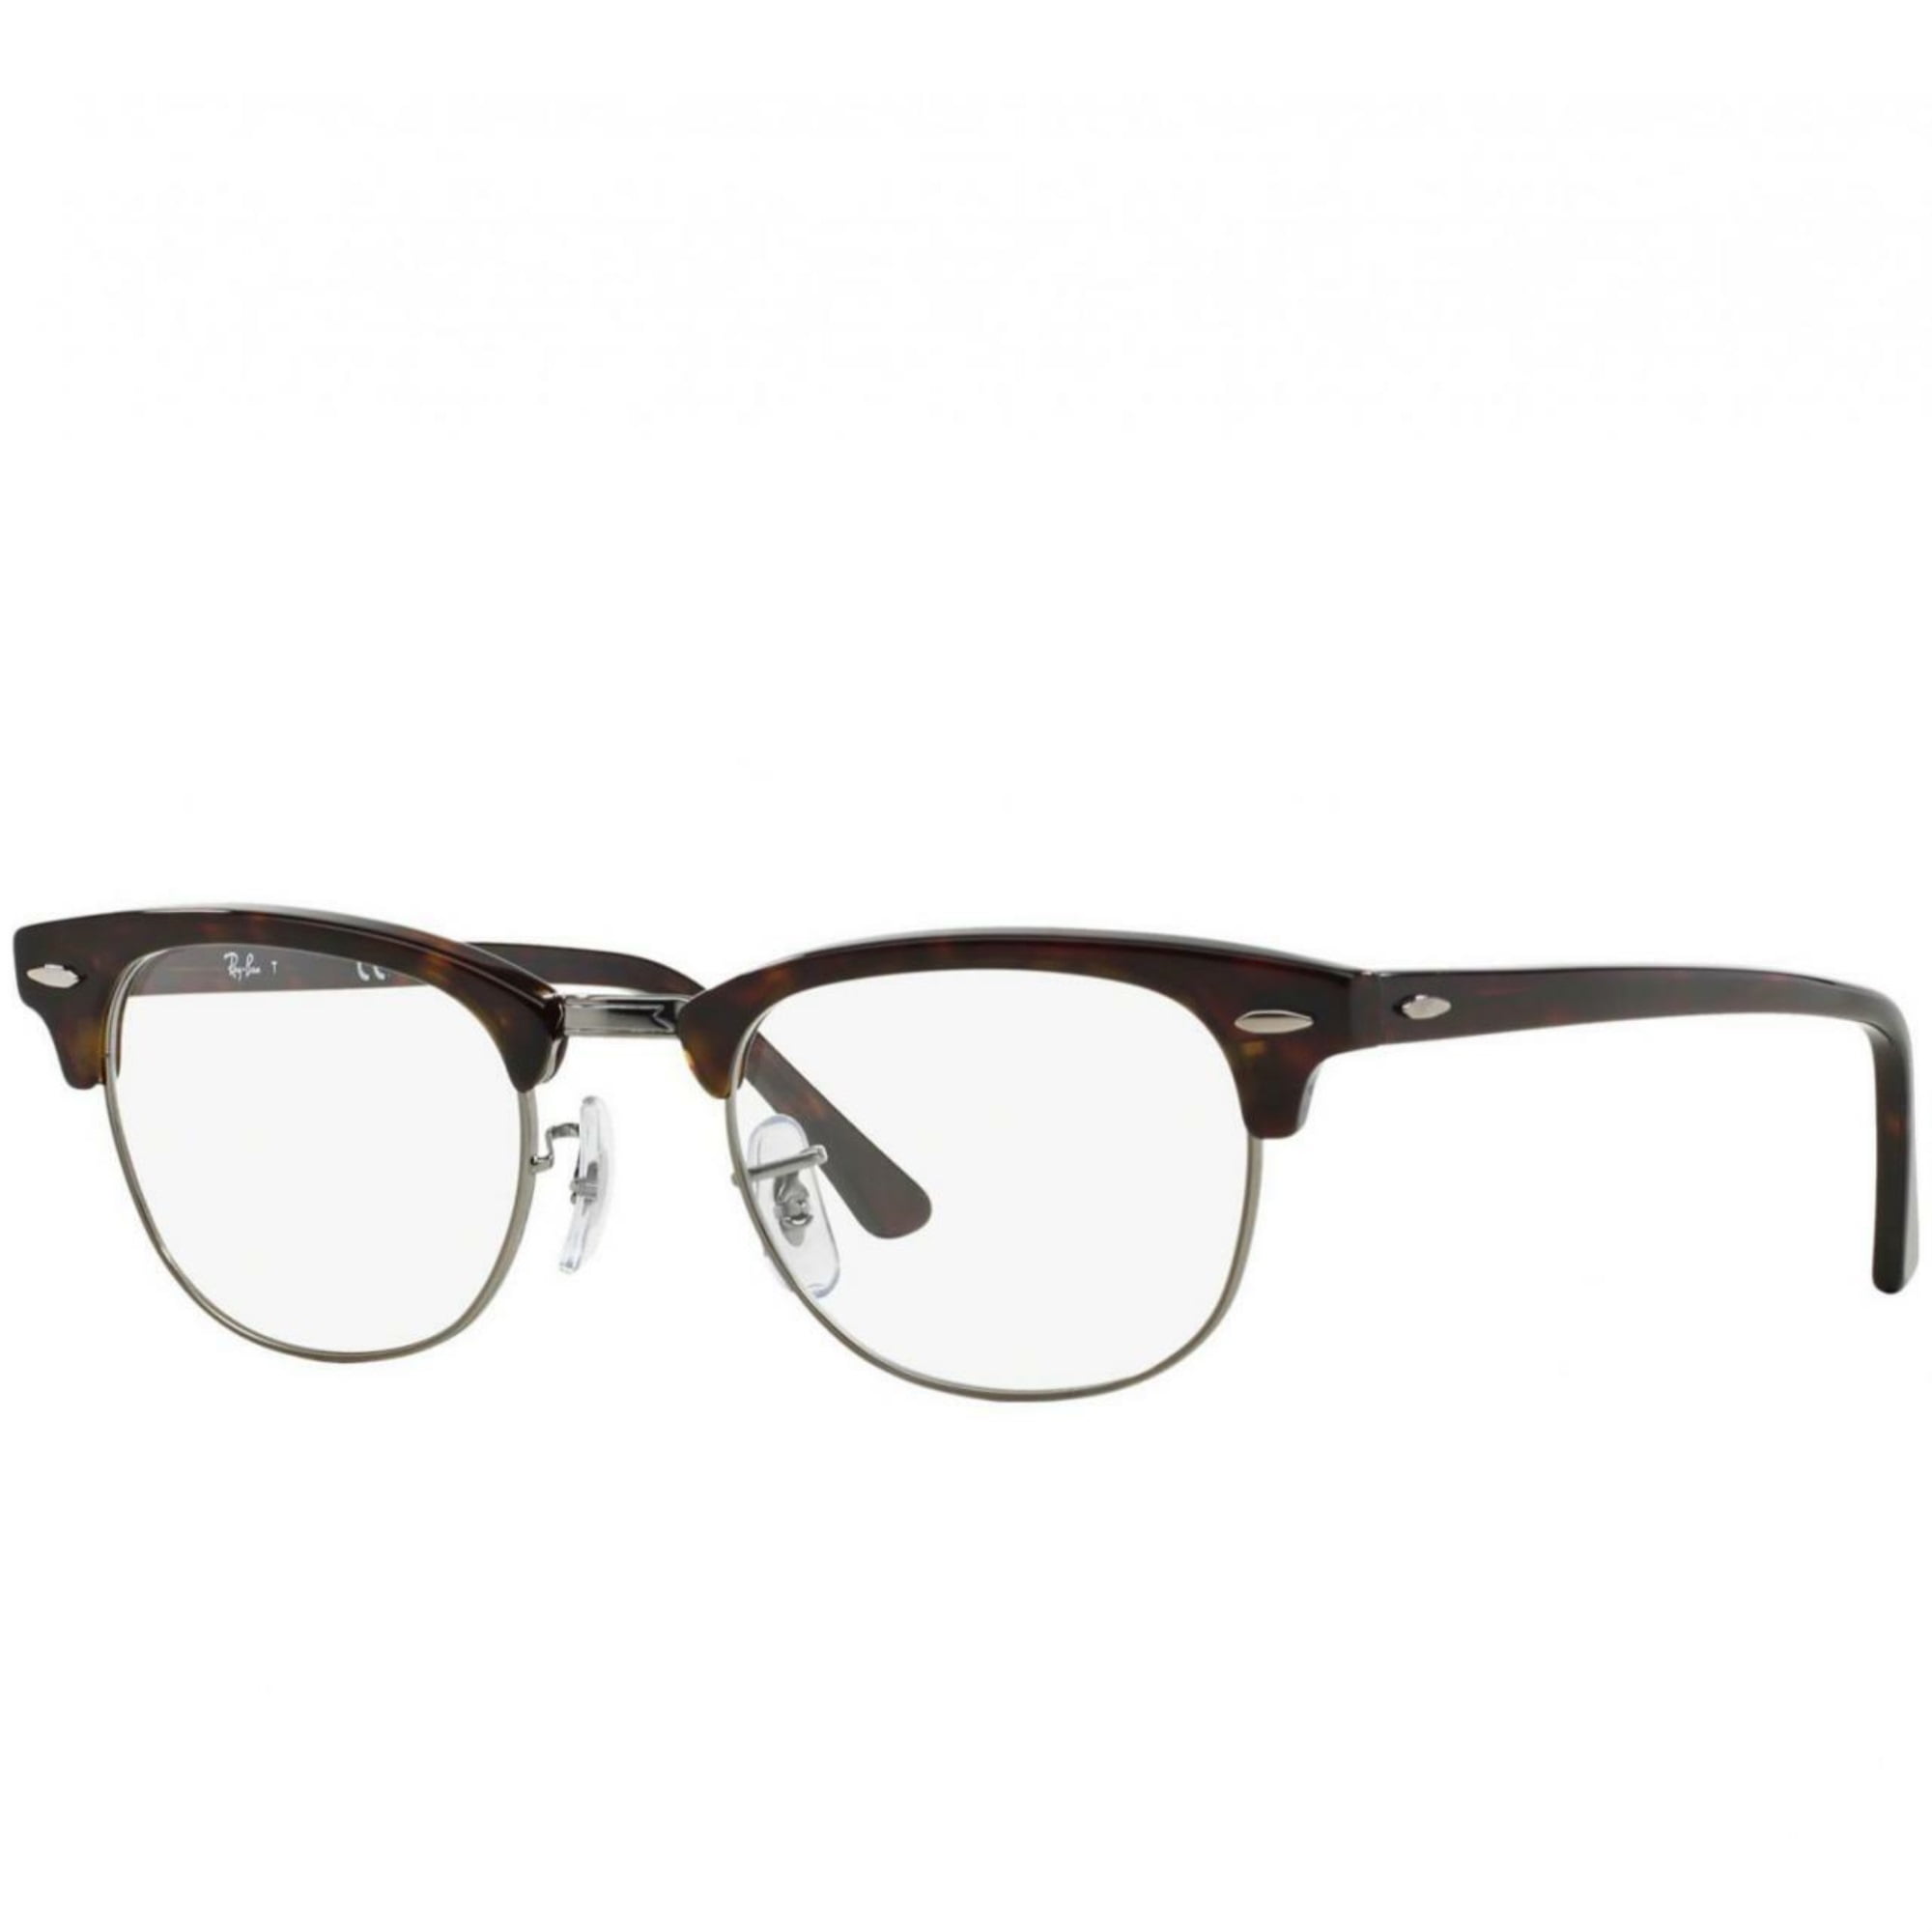 Ray Ban Rb5154 2012 Clubmaster Optics Tortoise Full Rim Square Eyeglasses Frames